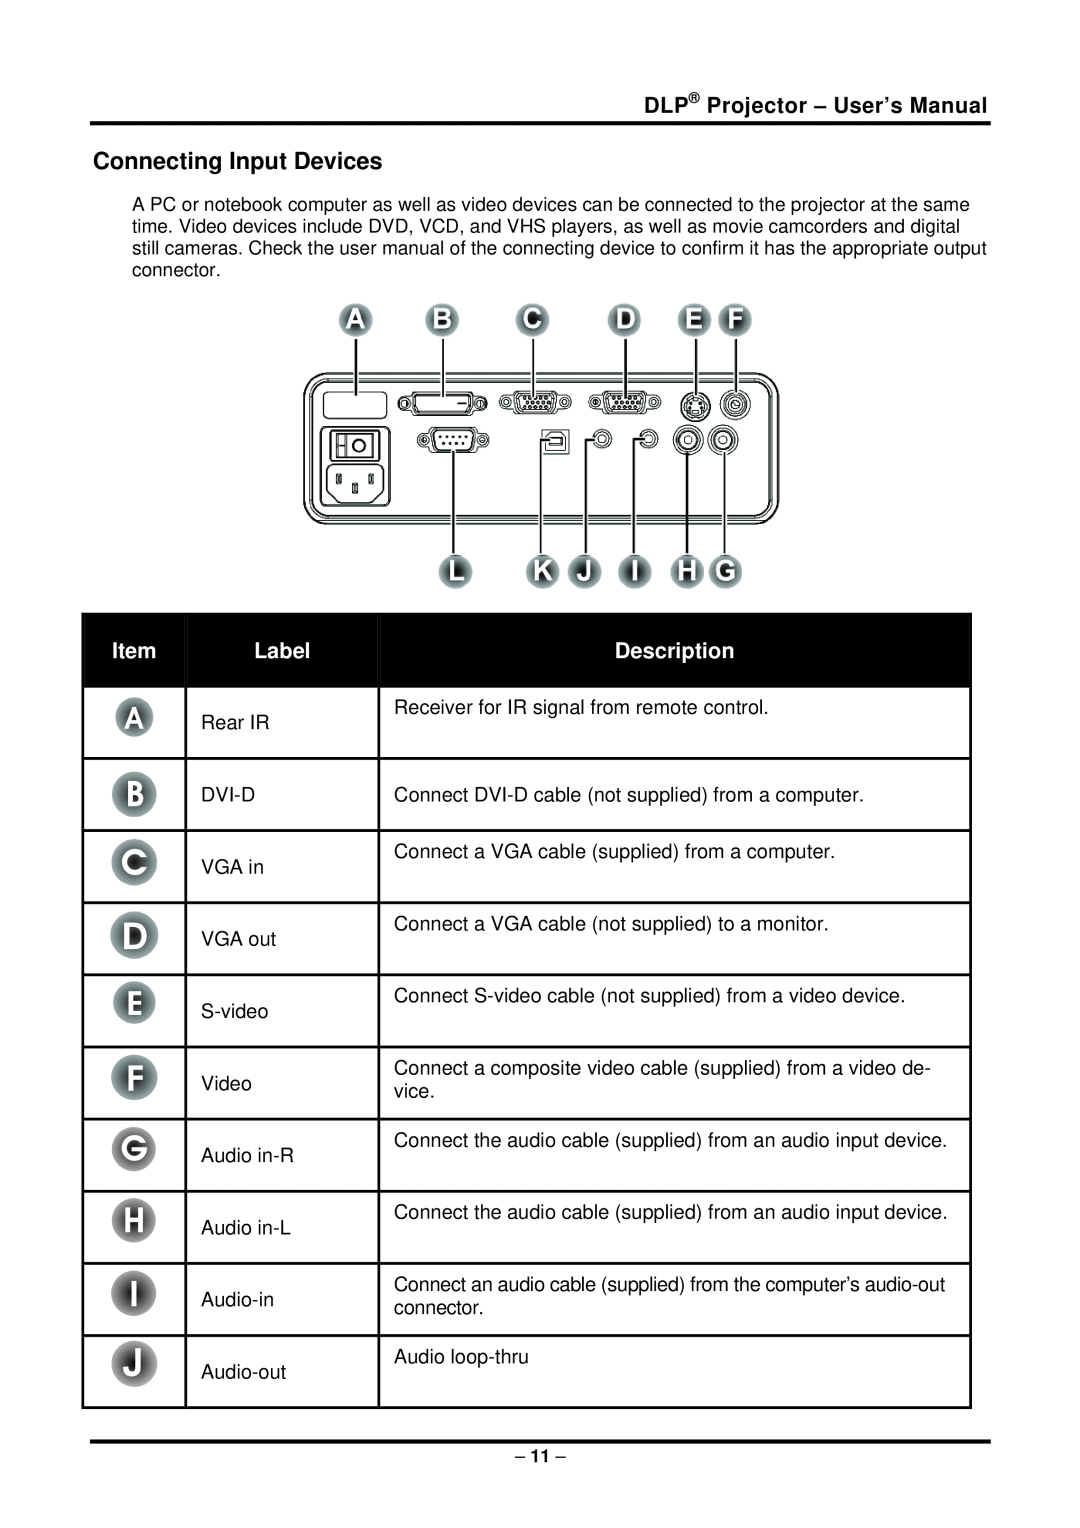 Planar PR5022 manual Connecting Input Devices, DLP Projector - User’s Manual, Label, Description 